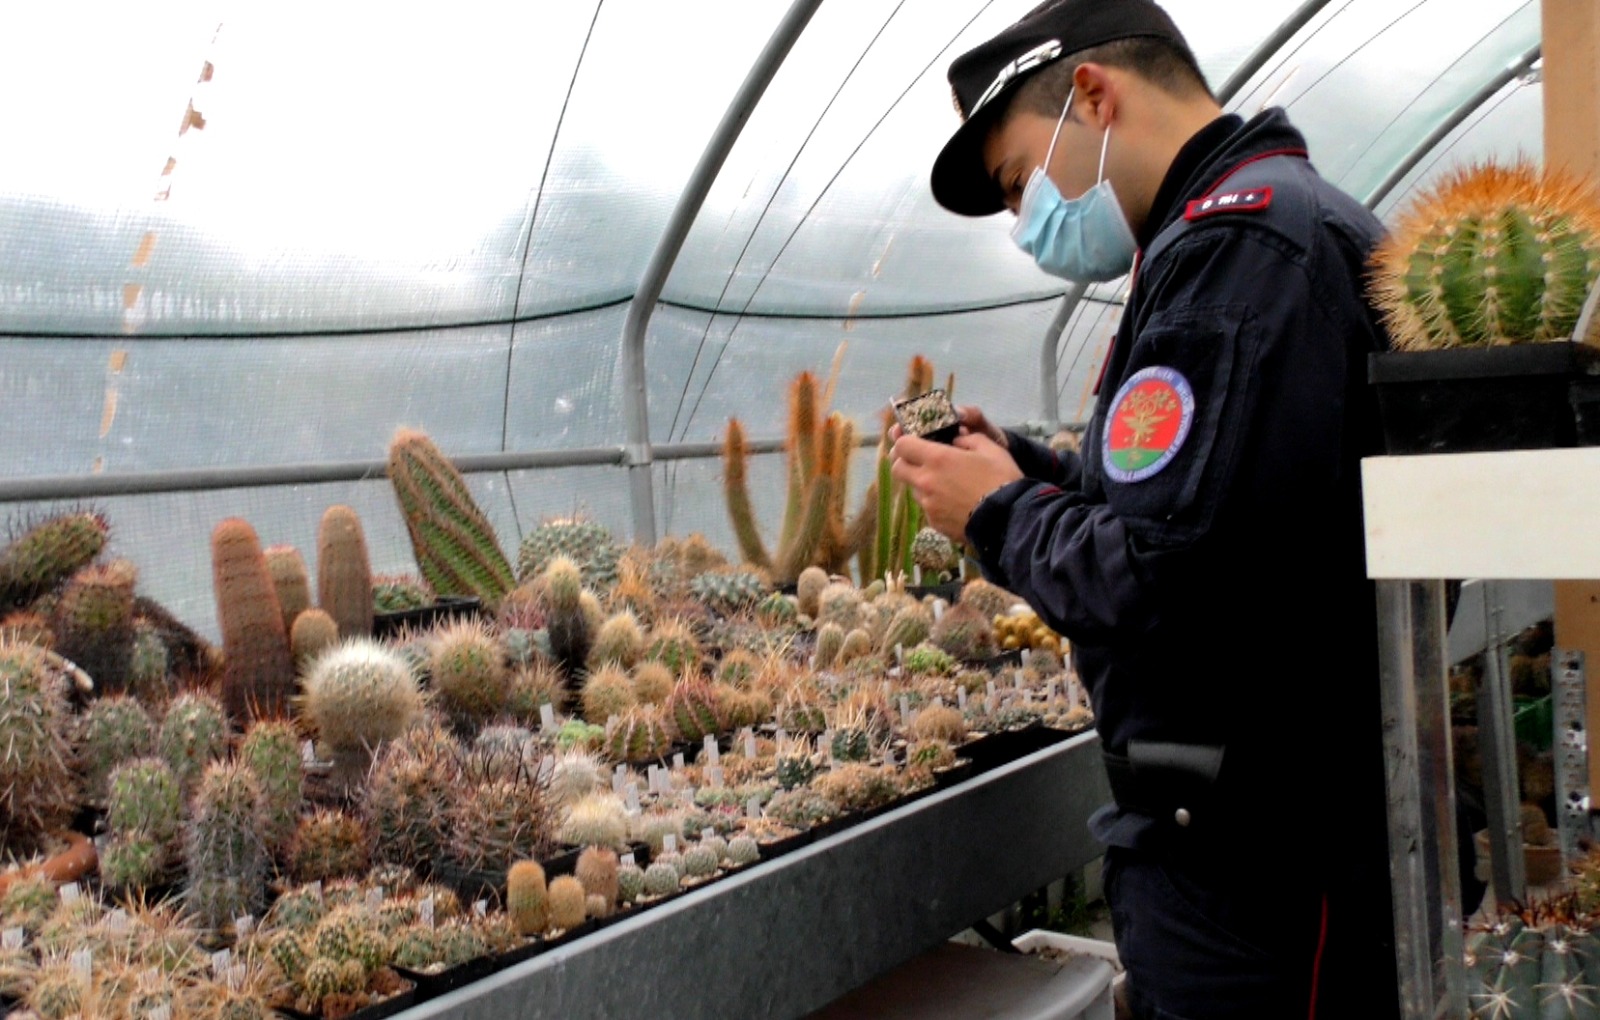 Mille cactus estirpati illegalmente tornano in Cile